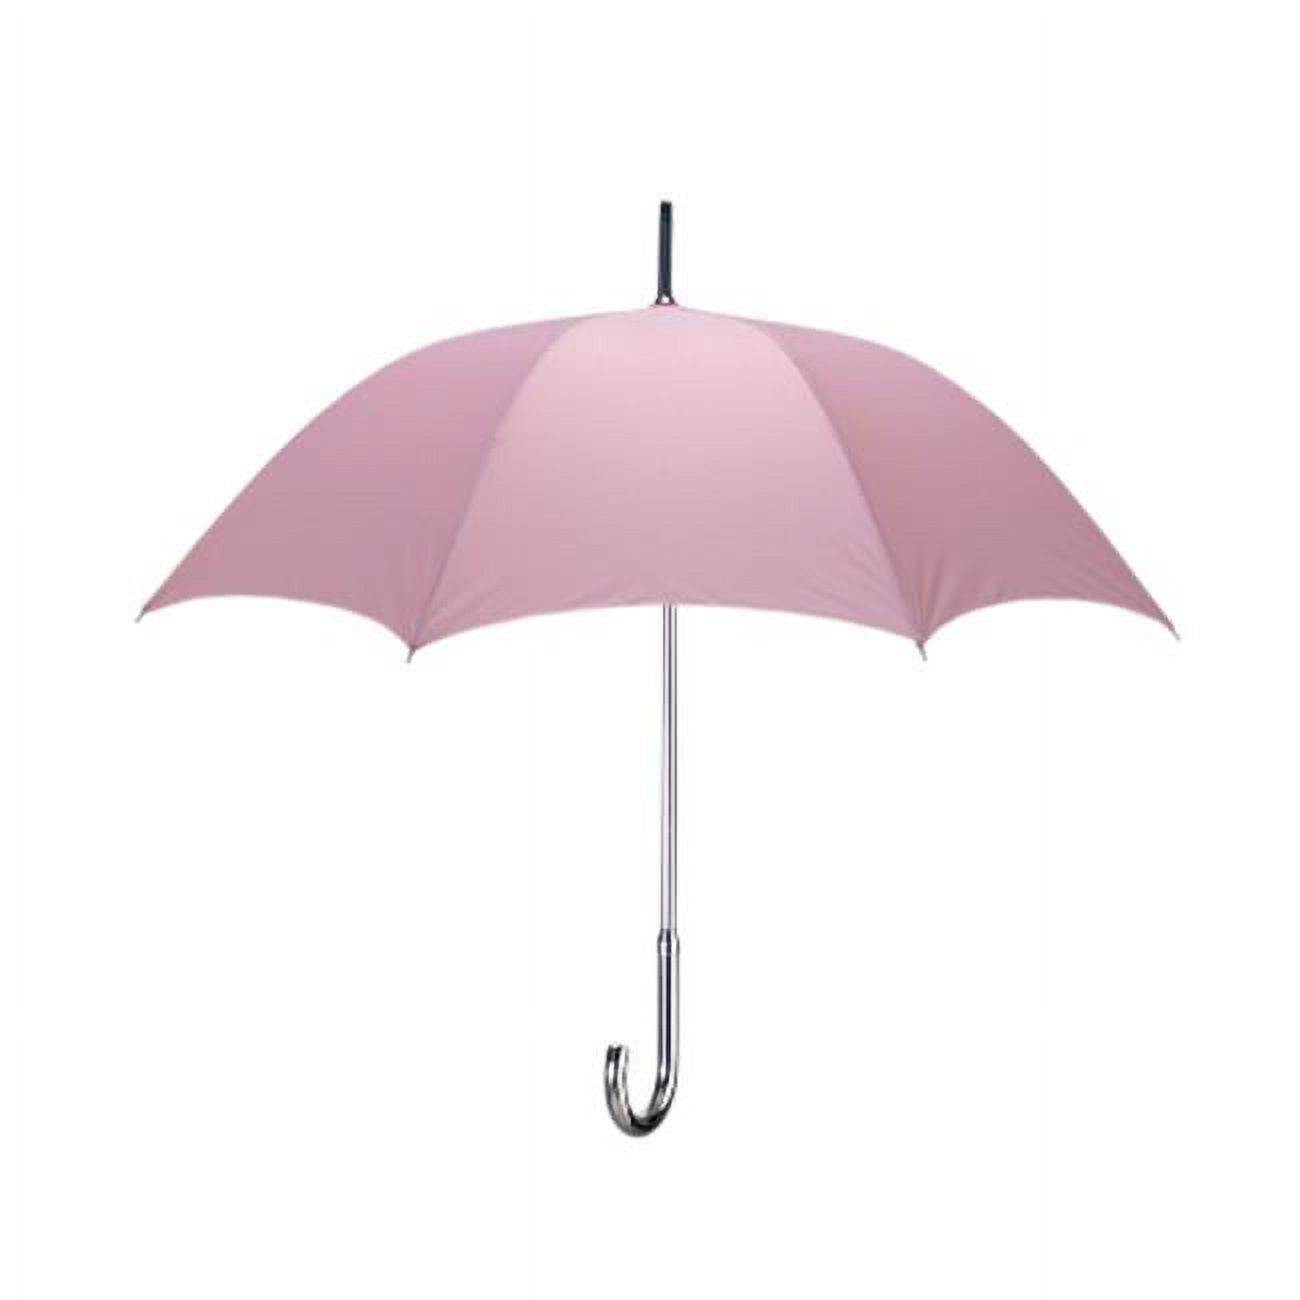 Peerless 2410AL-Pink The Retro Umbrella, Pink - image 1 of 1